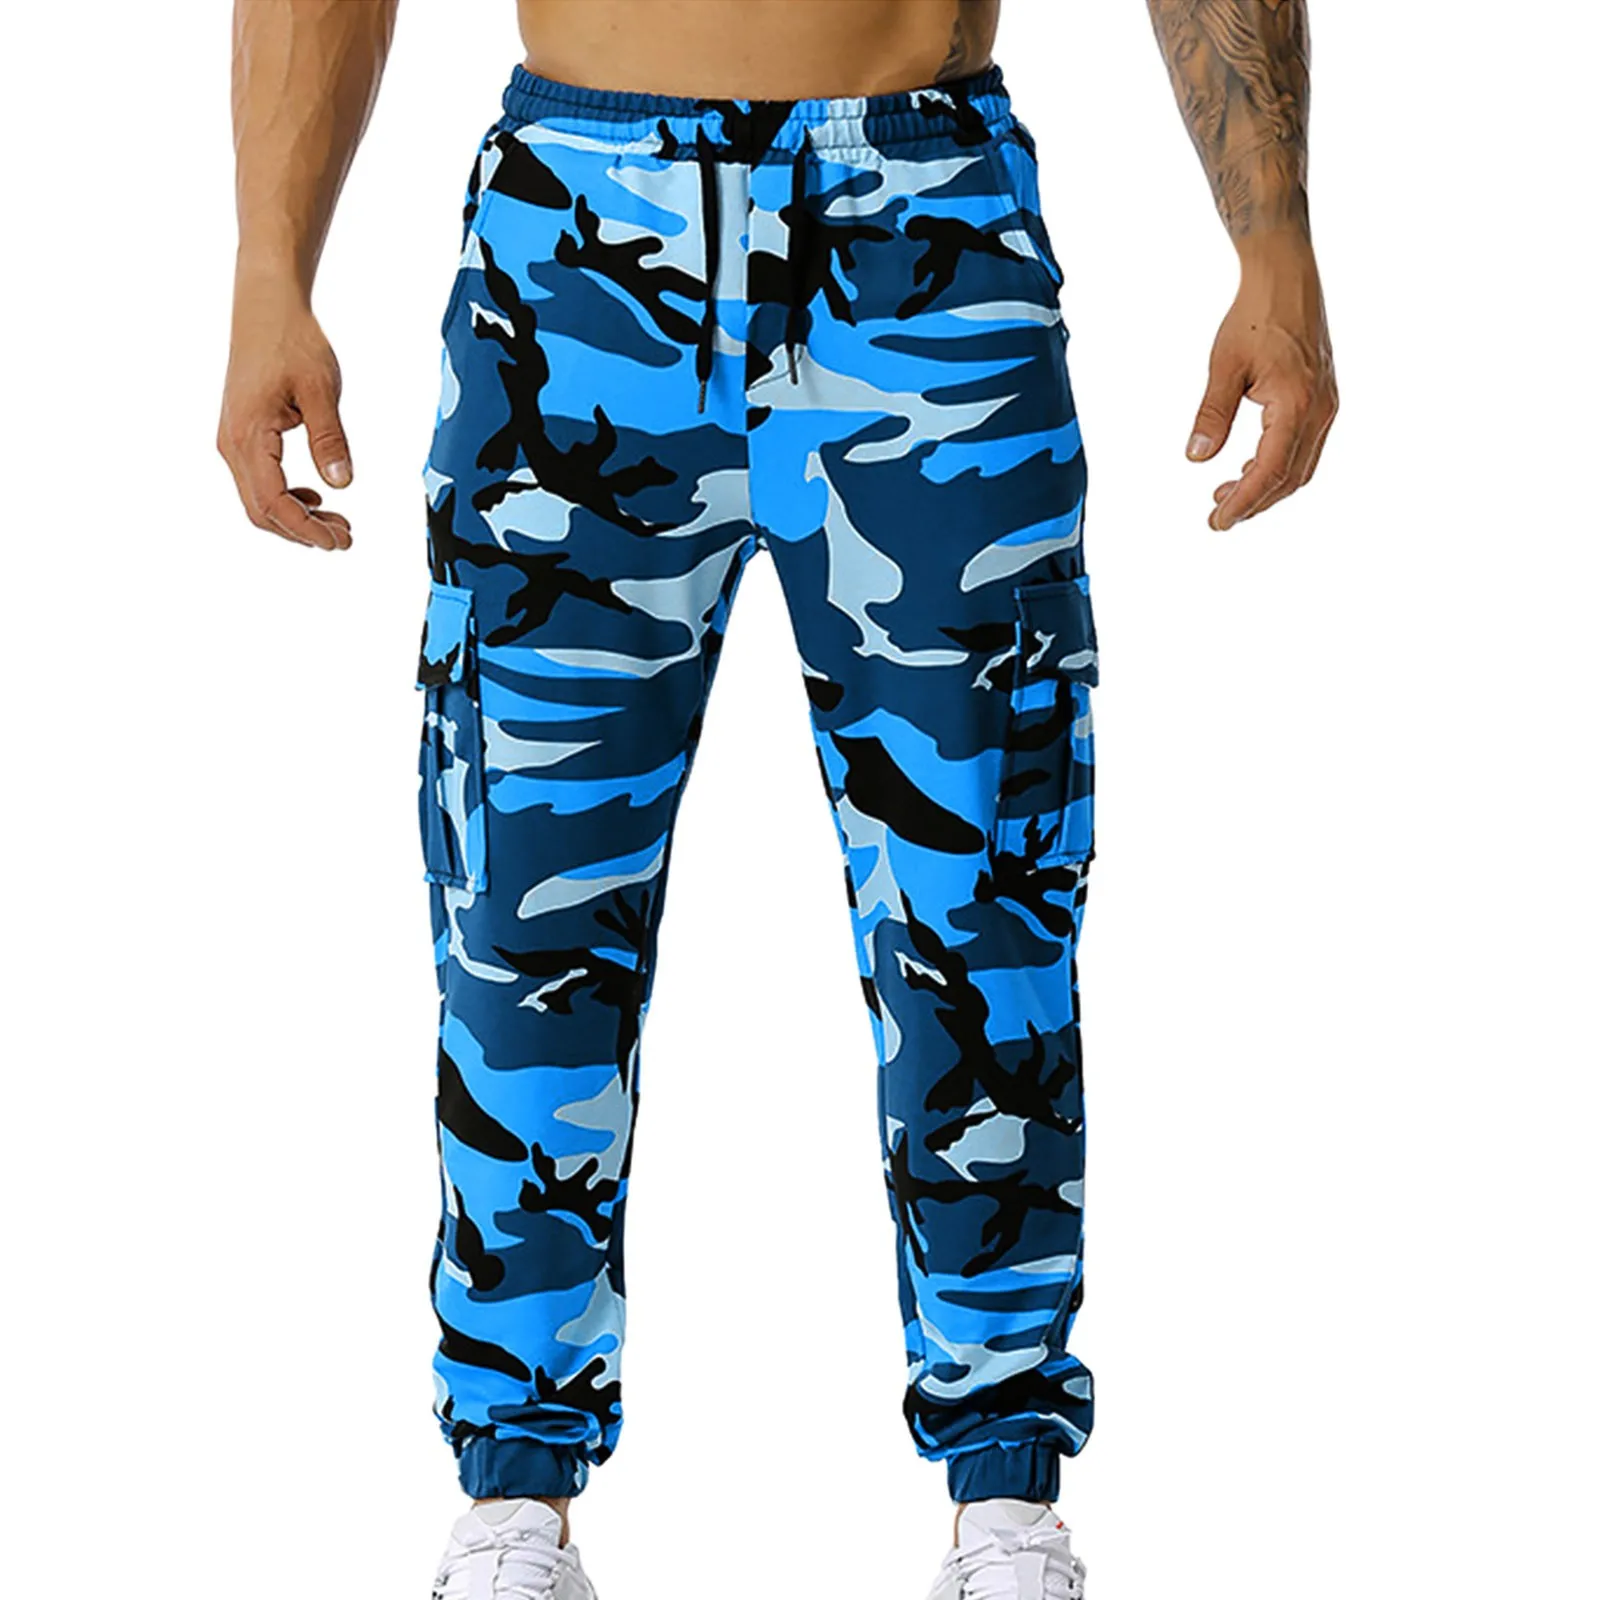 

Men Casual Pants Camouflage Elastic Mid-Waist Pocket Jogger Biker Workout Sweatpants Man Y2k Clothing Gym Pantalones Trousers